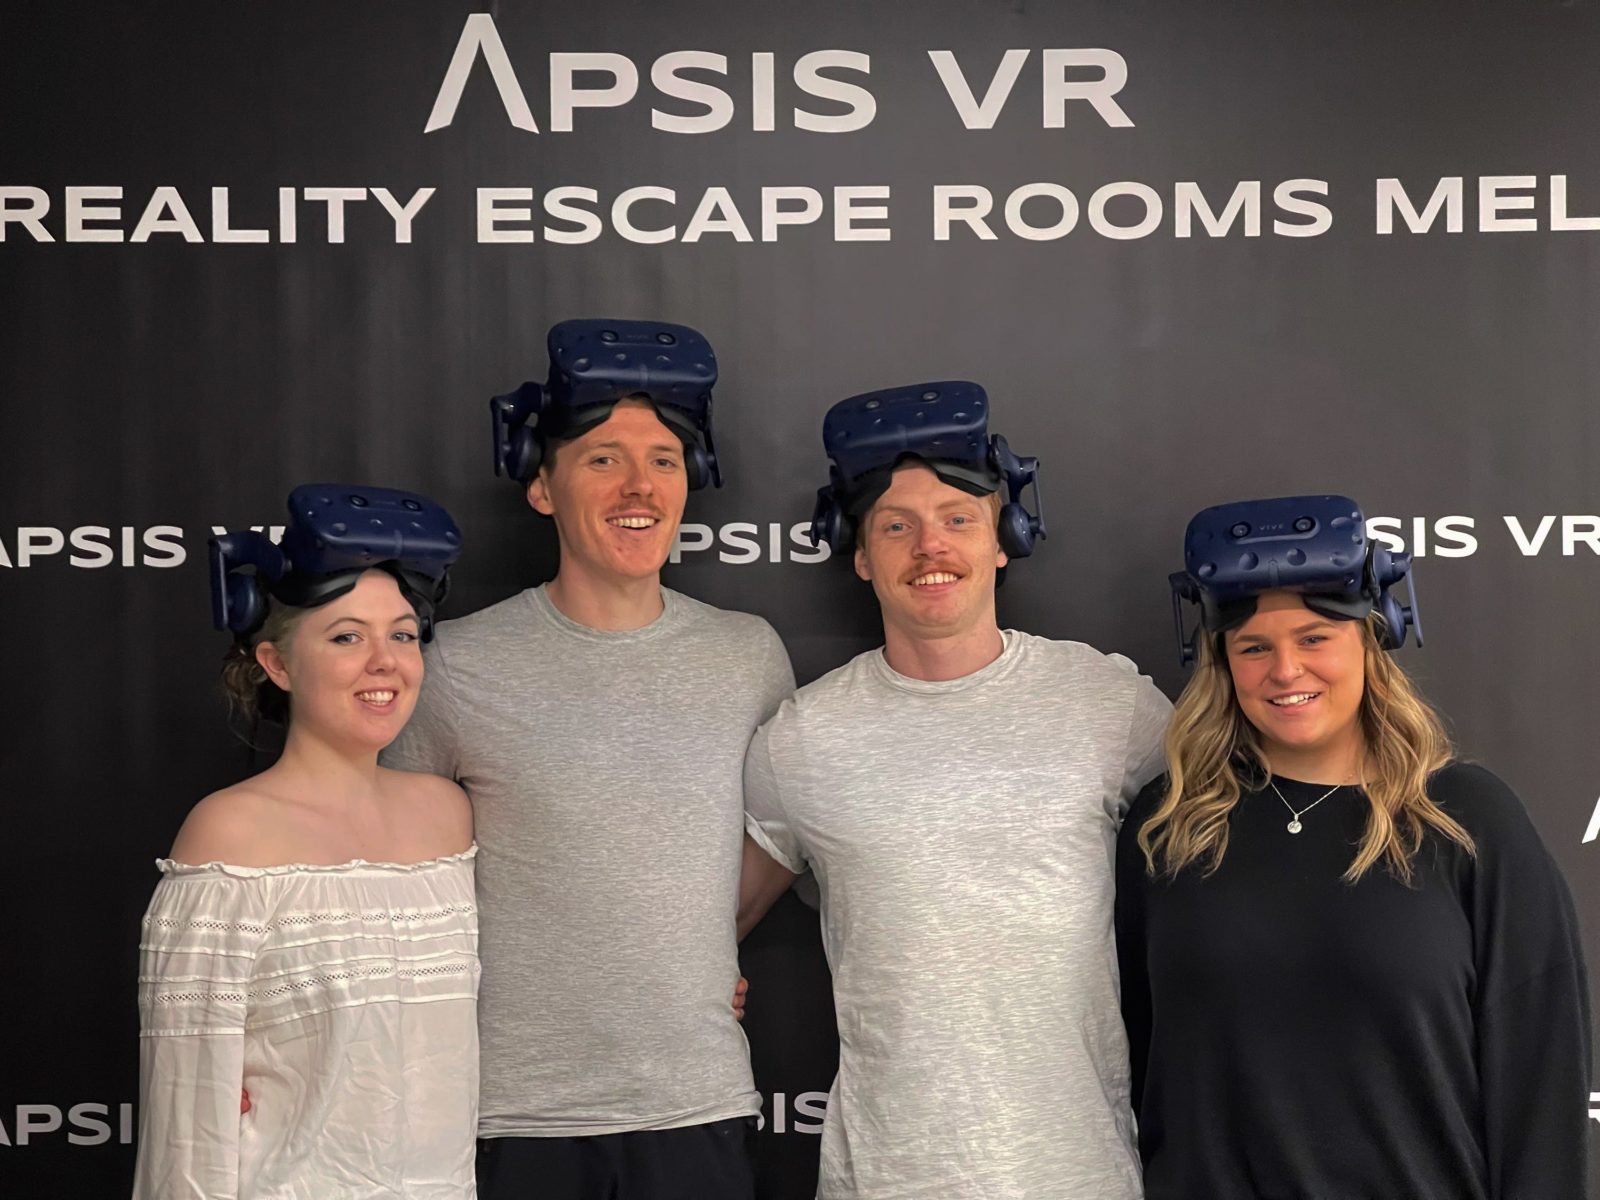 Apsis VR Melbourne Virtual Reality Escape Room Experiences